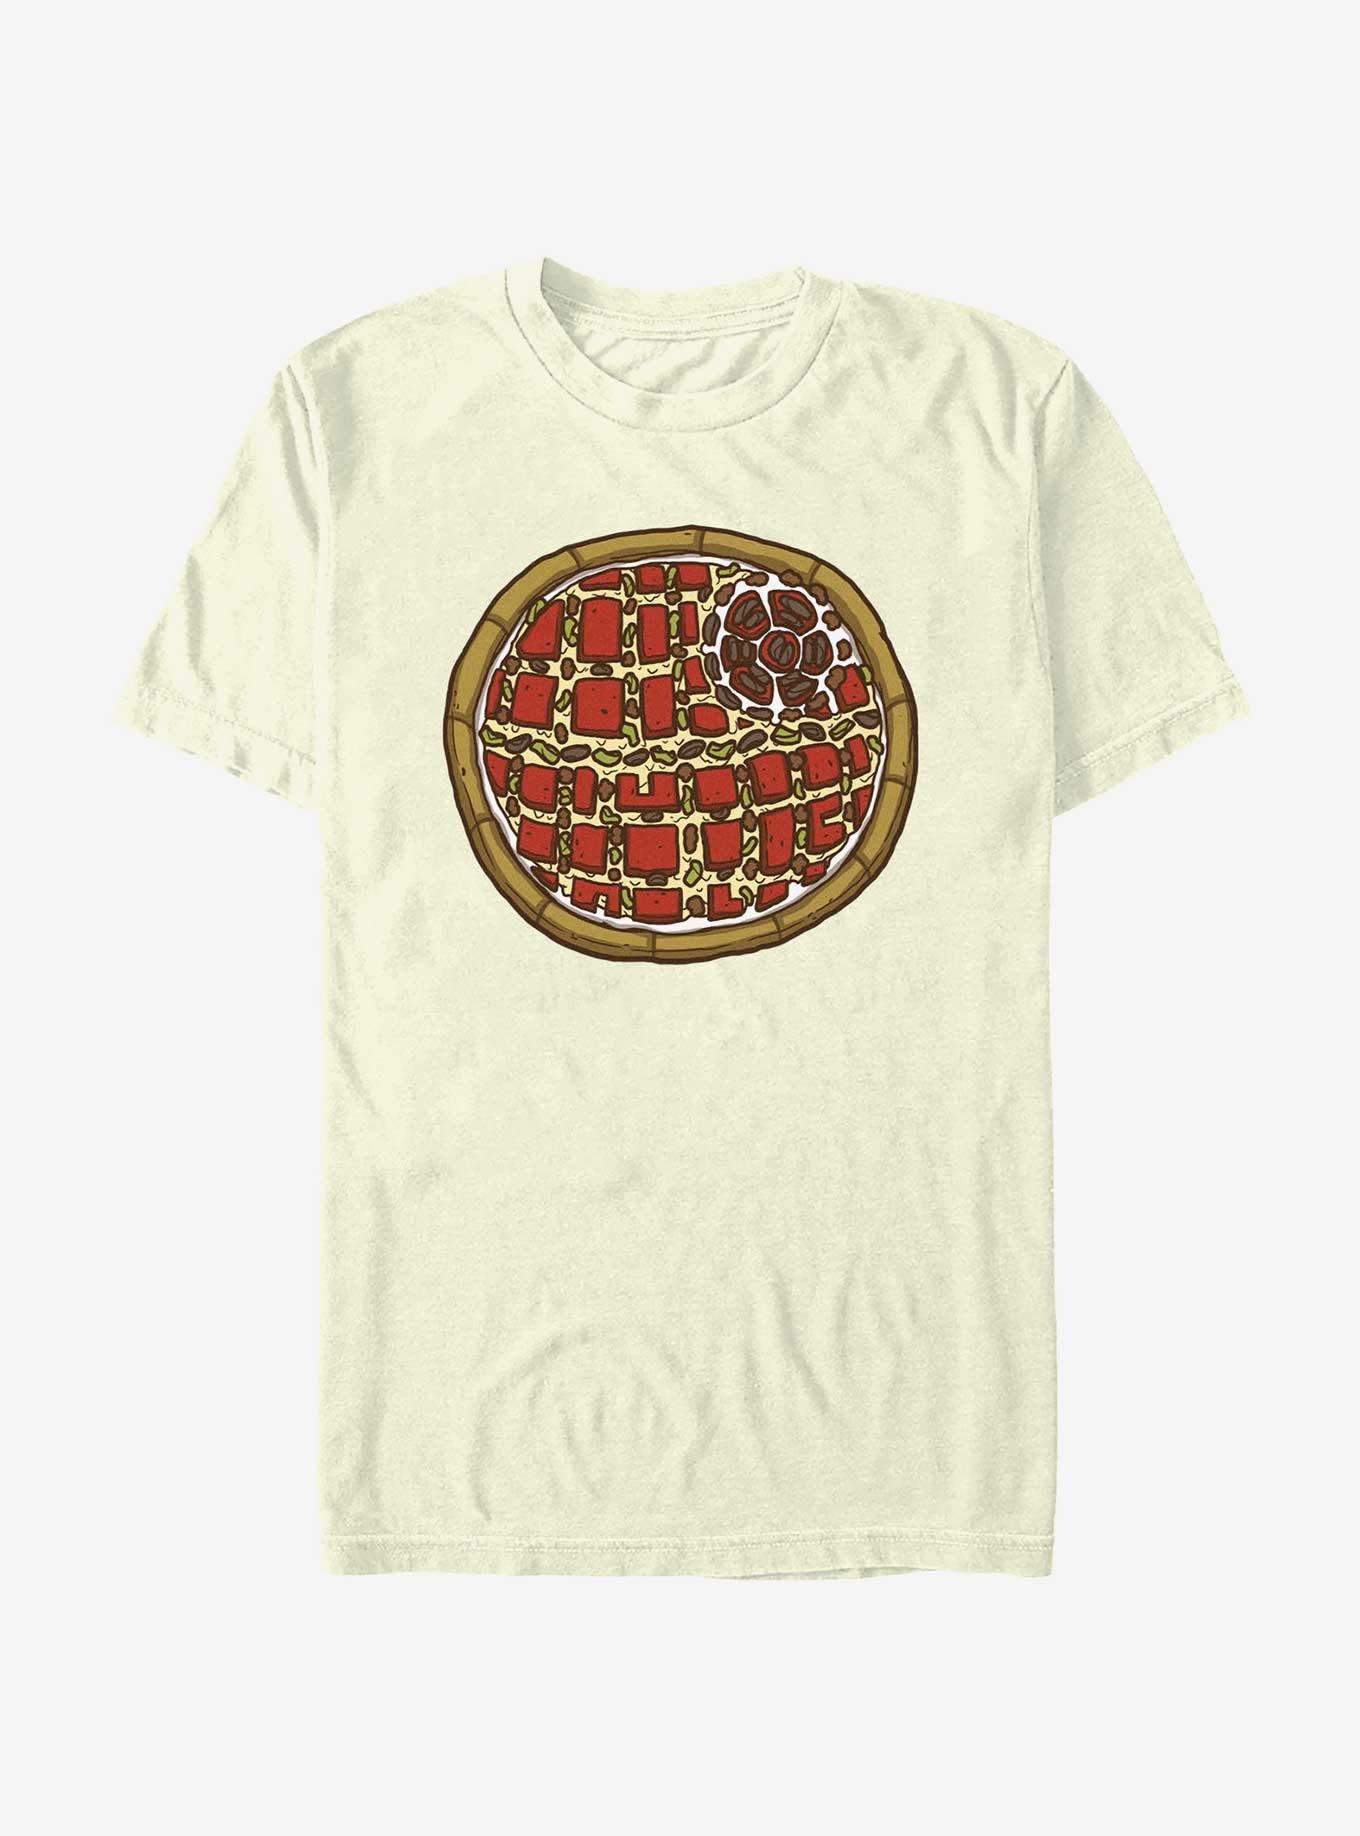 Star Wars Deathstar Pizza T-Shirt